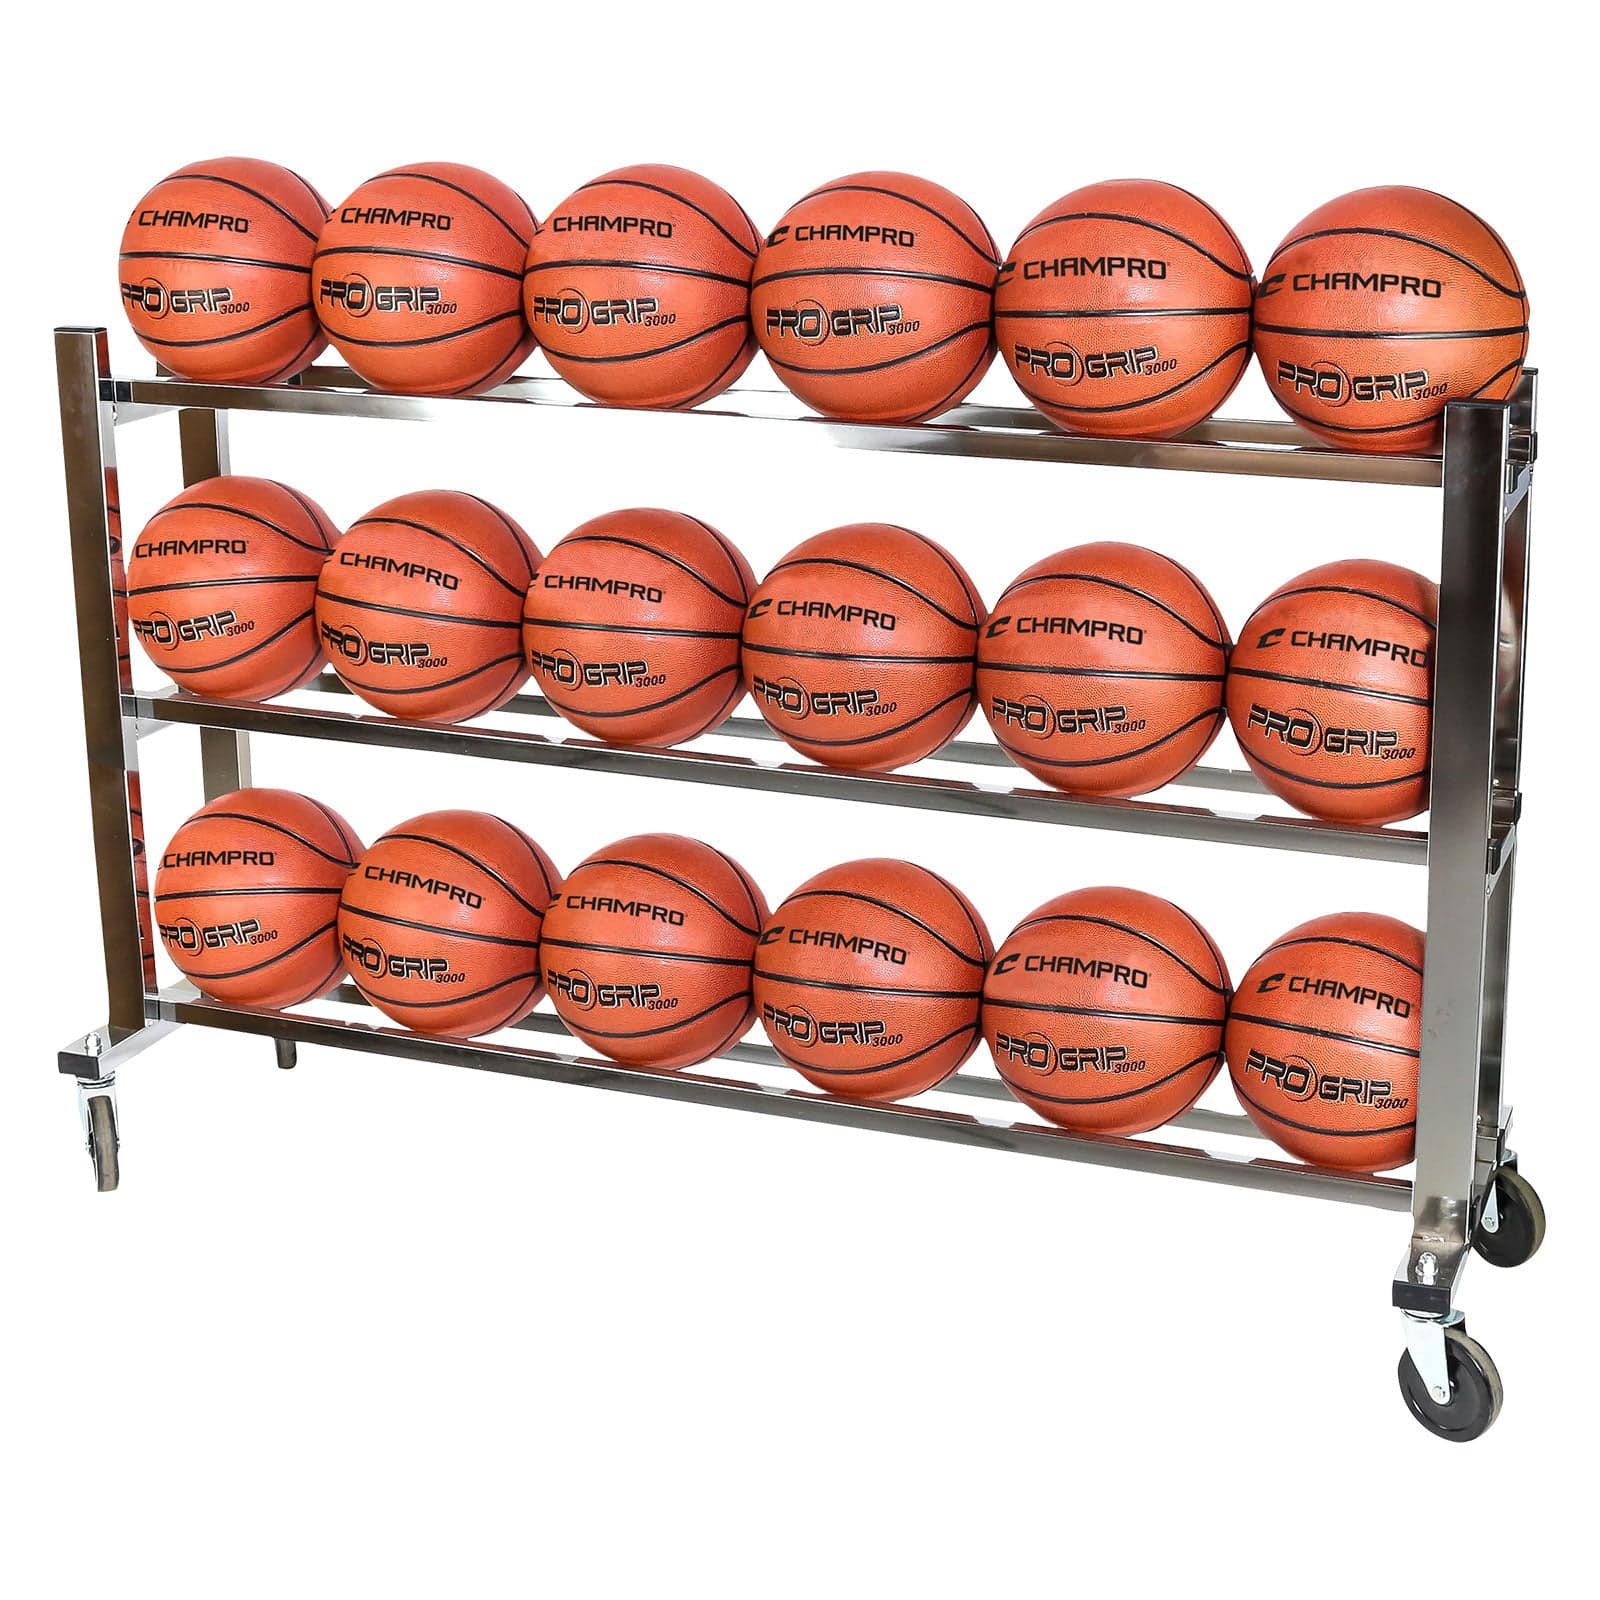 Champro 'Monster' 18-Ball Capacity Basketball Car